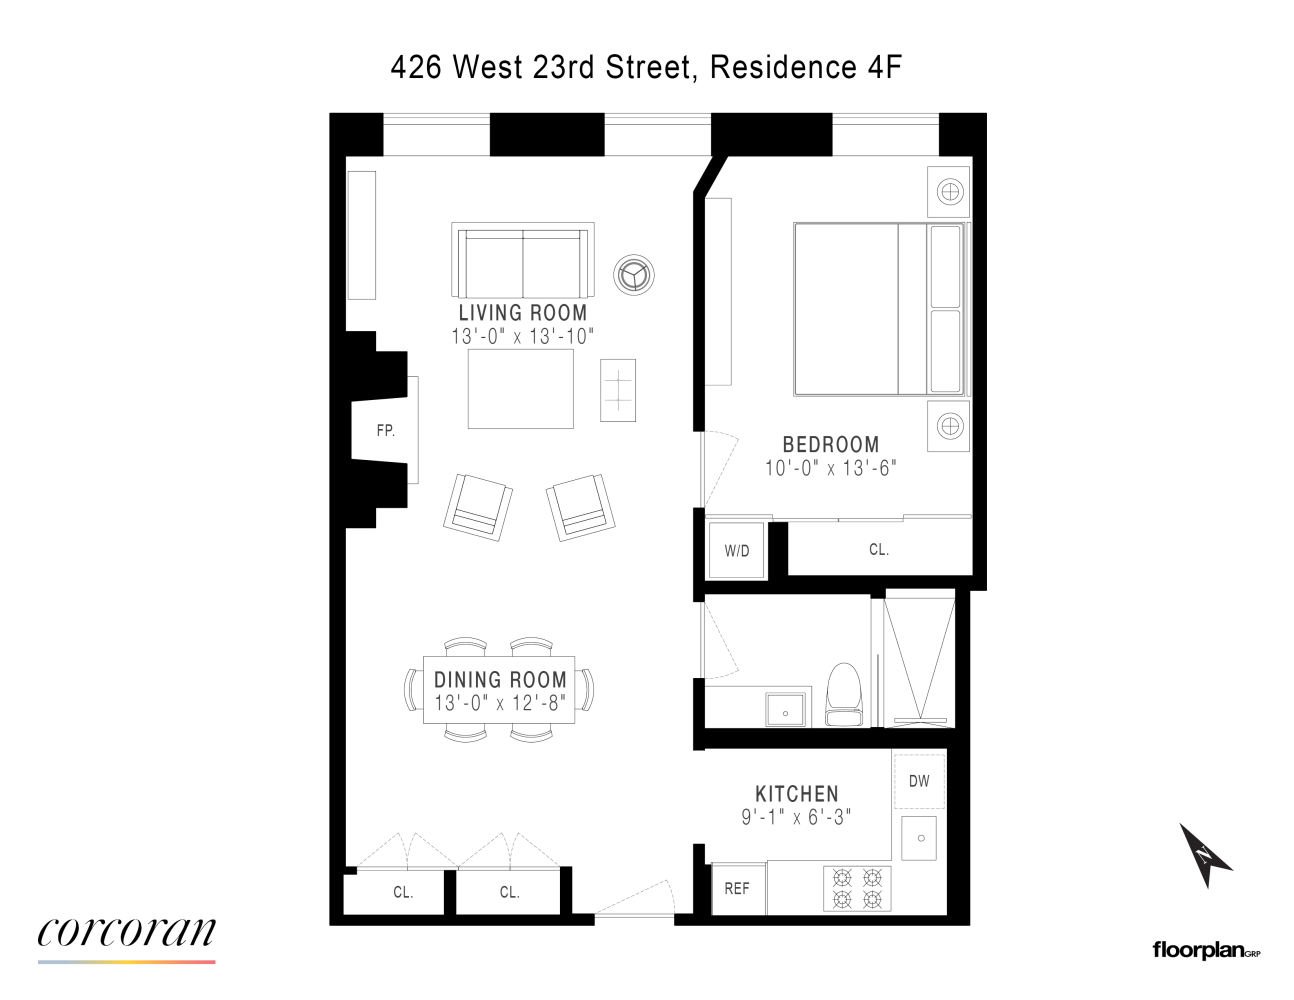 Floorplan for 426 West 23rd Street, 4F